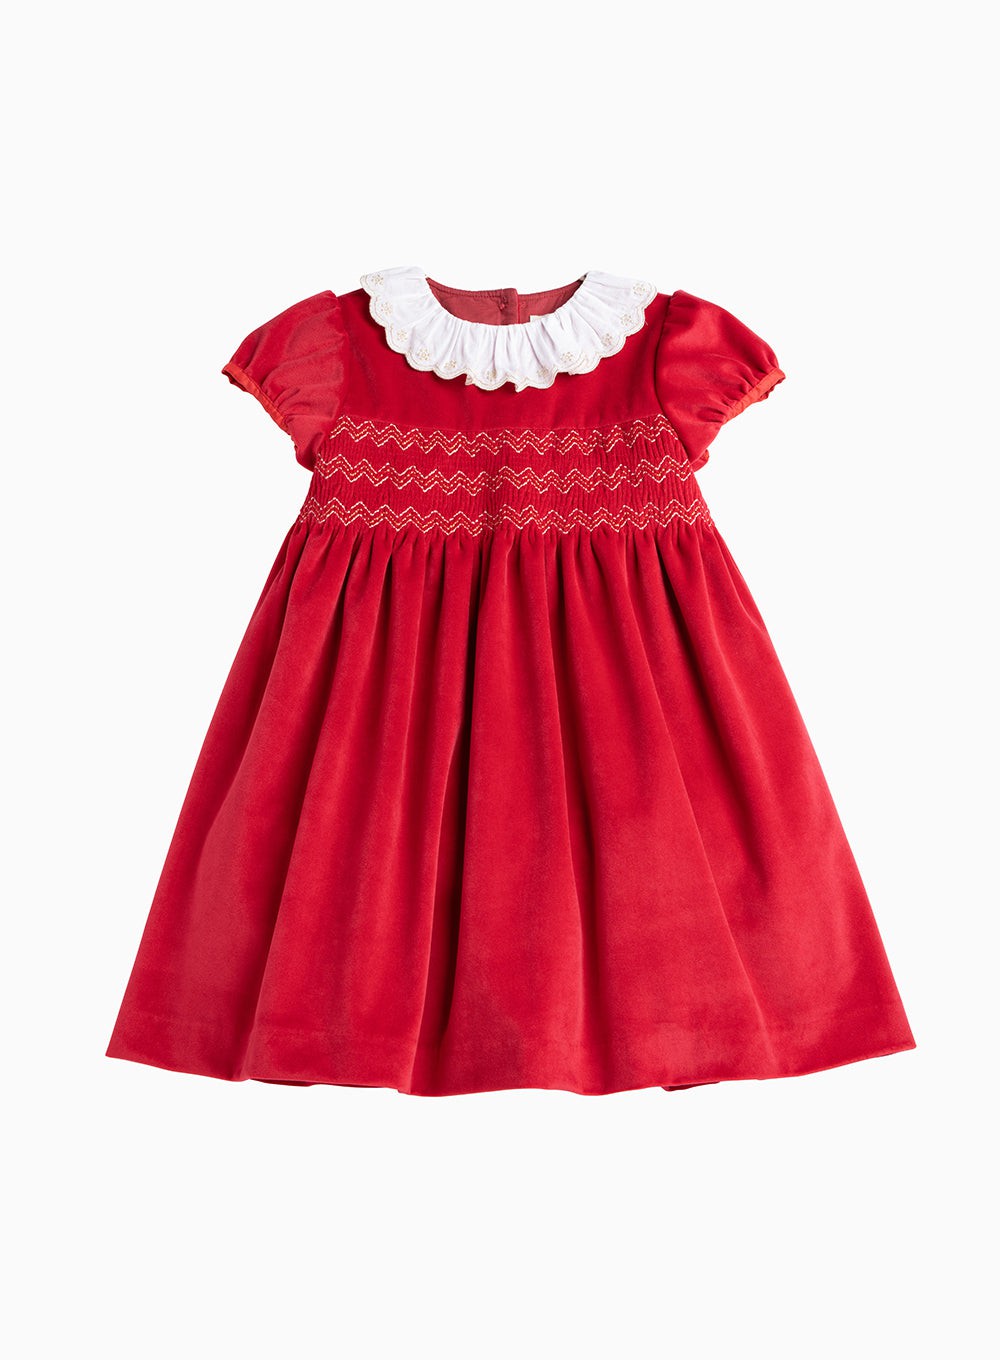 Lily Rose Gold Dress Octavia Velvet Party Dress in Red